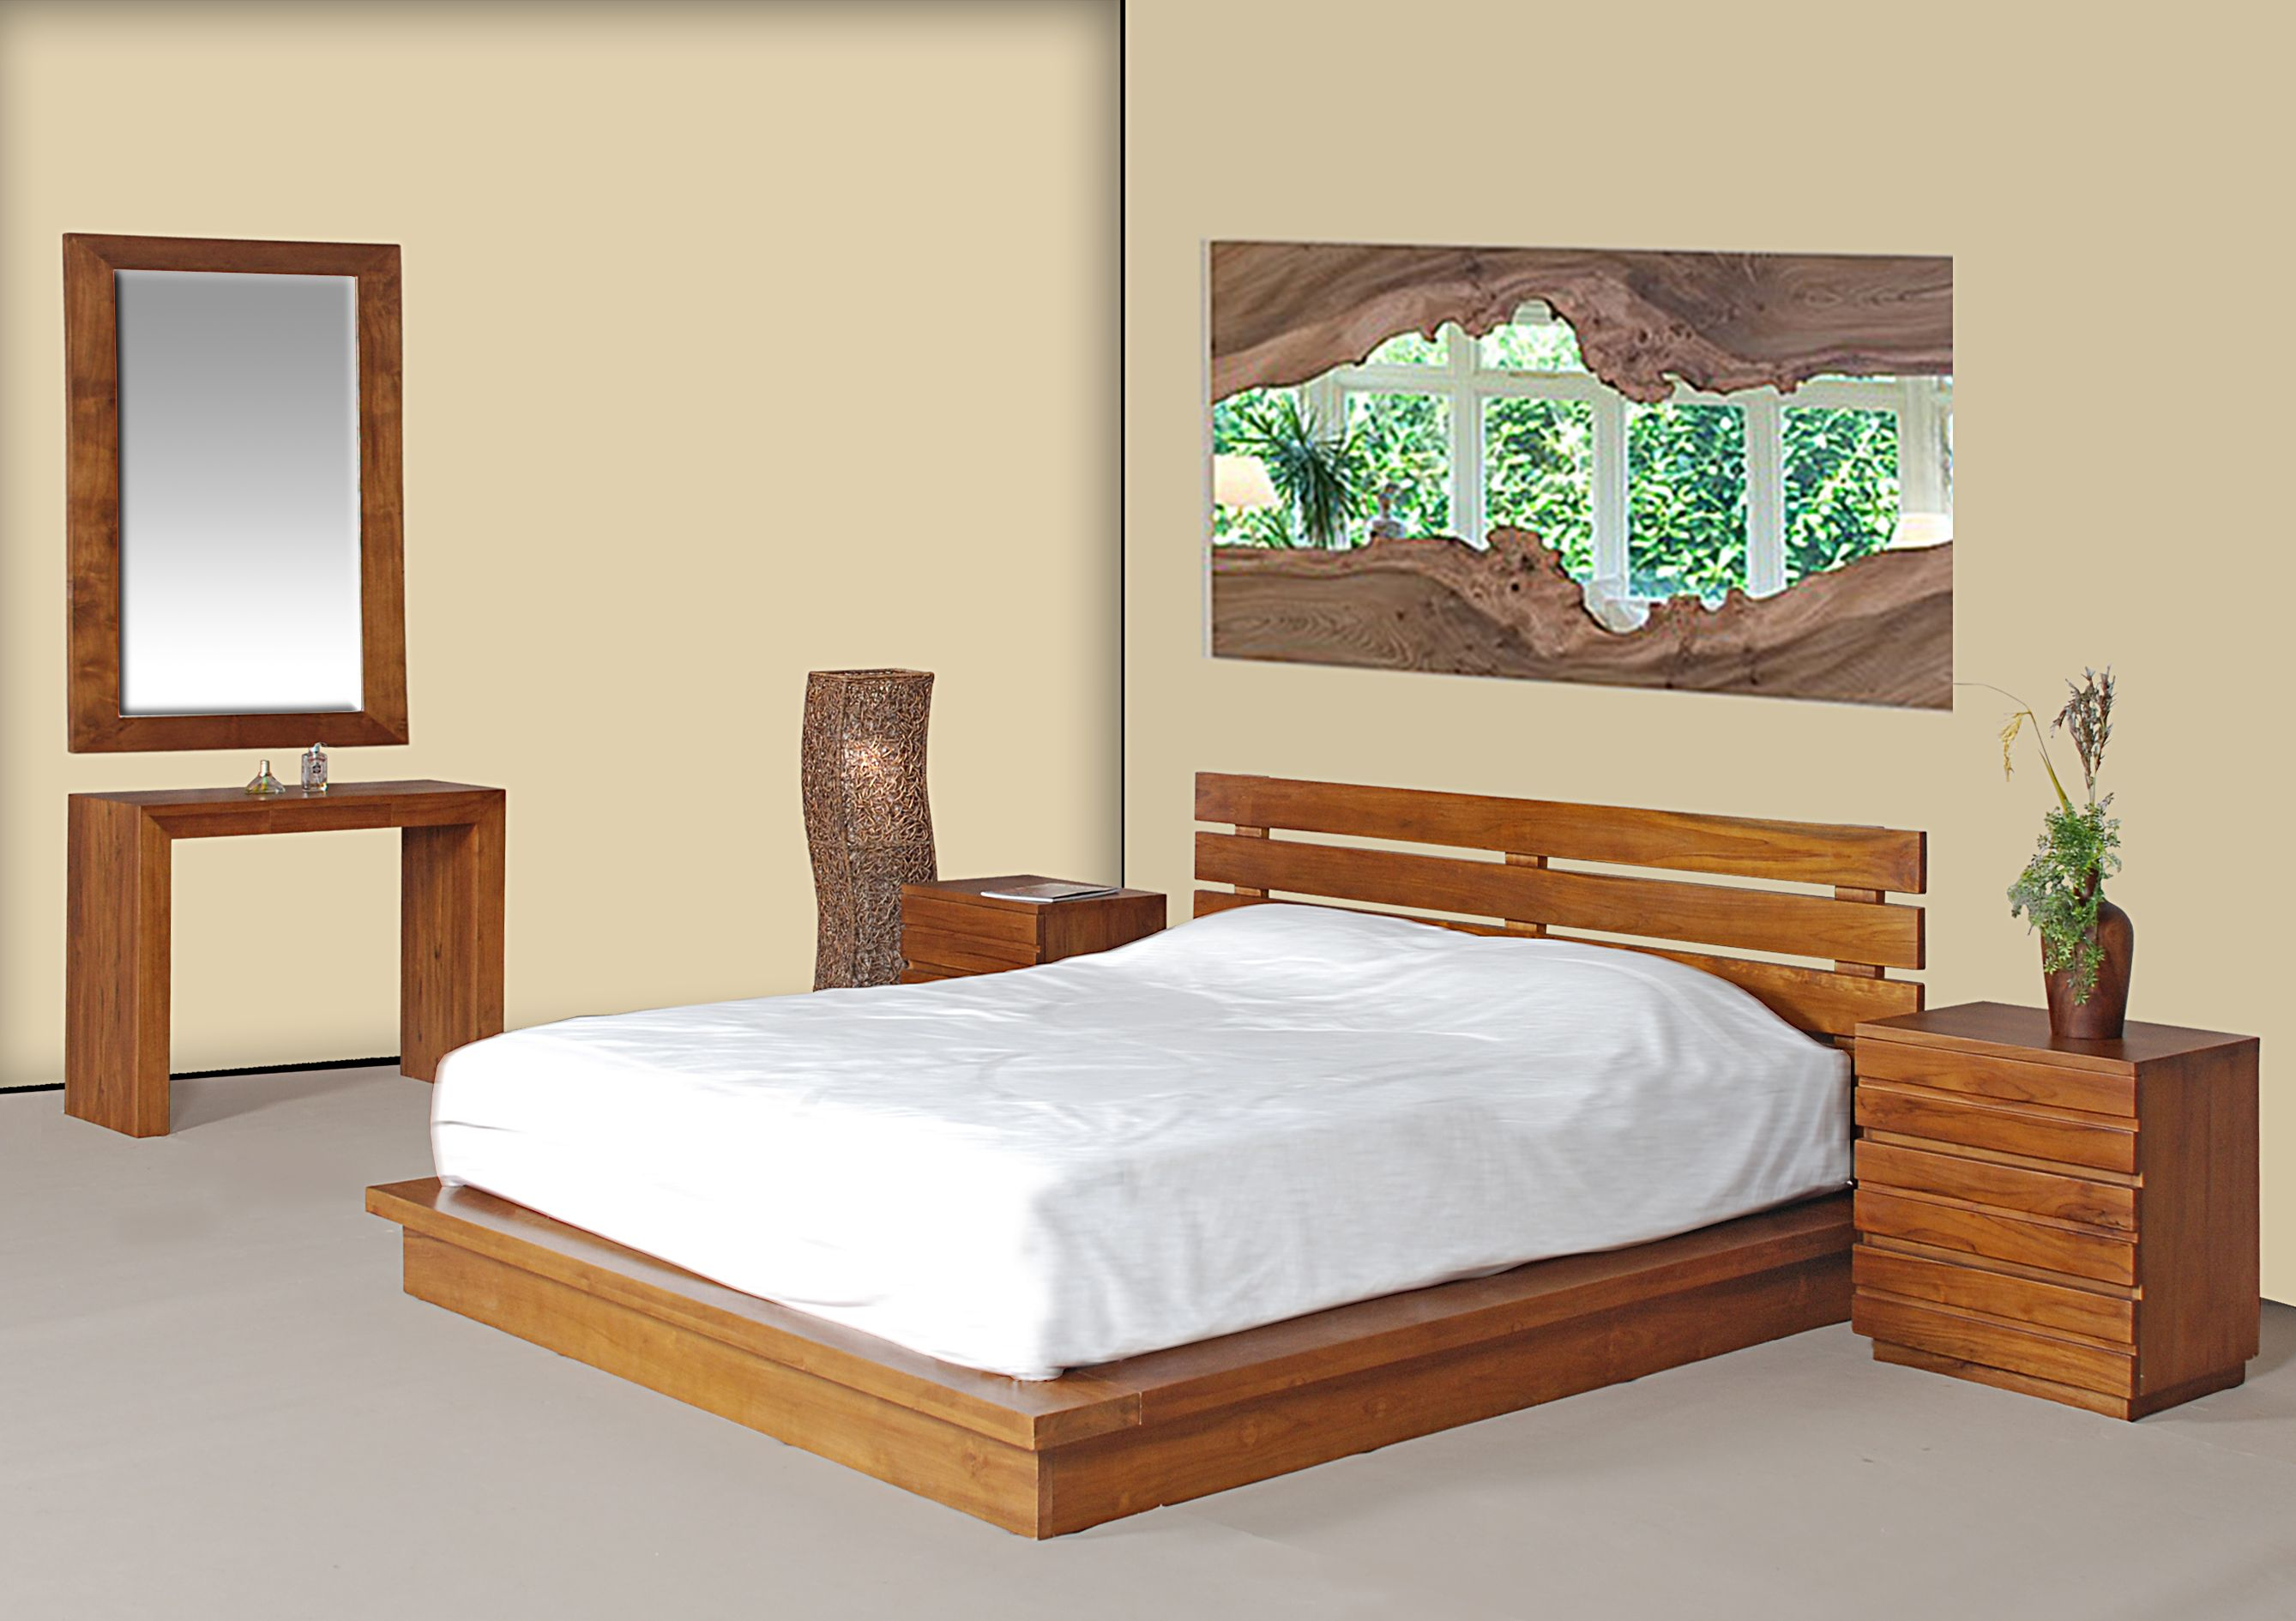 Teak Wood Bedroom Set In Malaysia 03 80820341 Teak Wood Bedroom pertaining to measurements 2677 X 1890